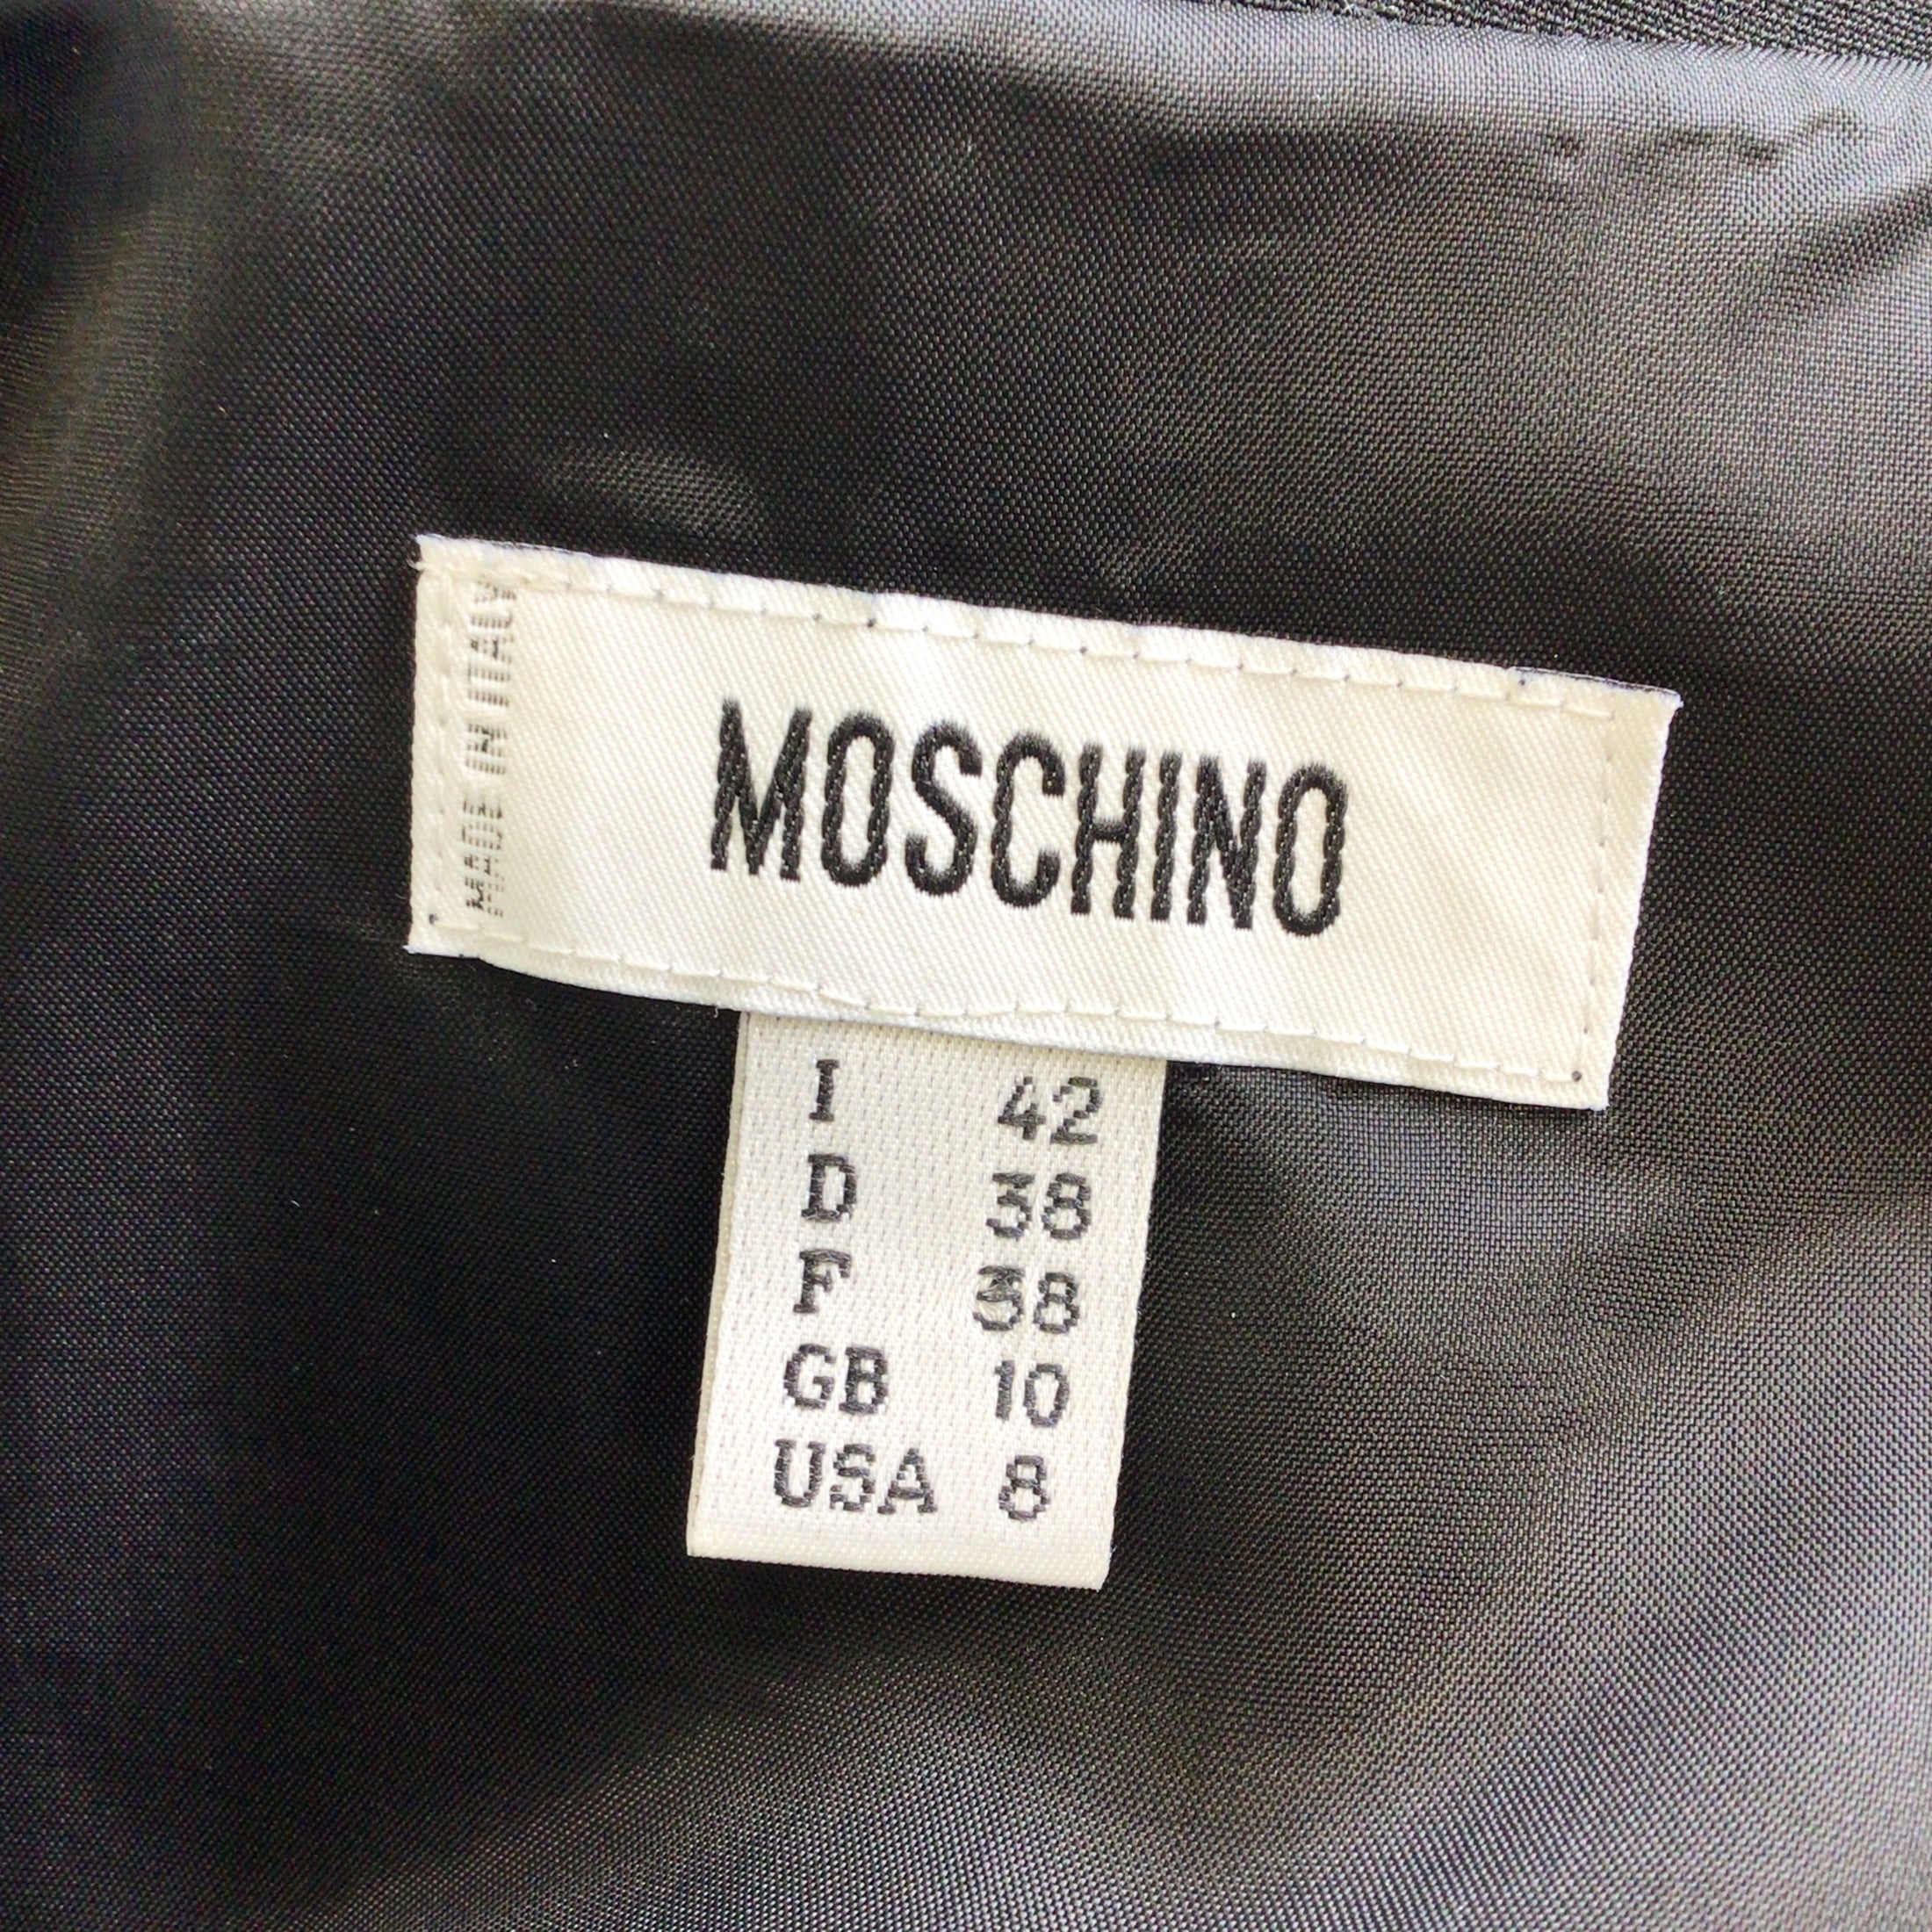 Moschino Black Sleeveless Crepe Midi Dress